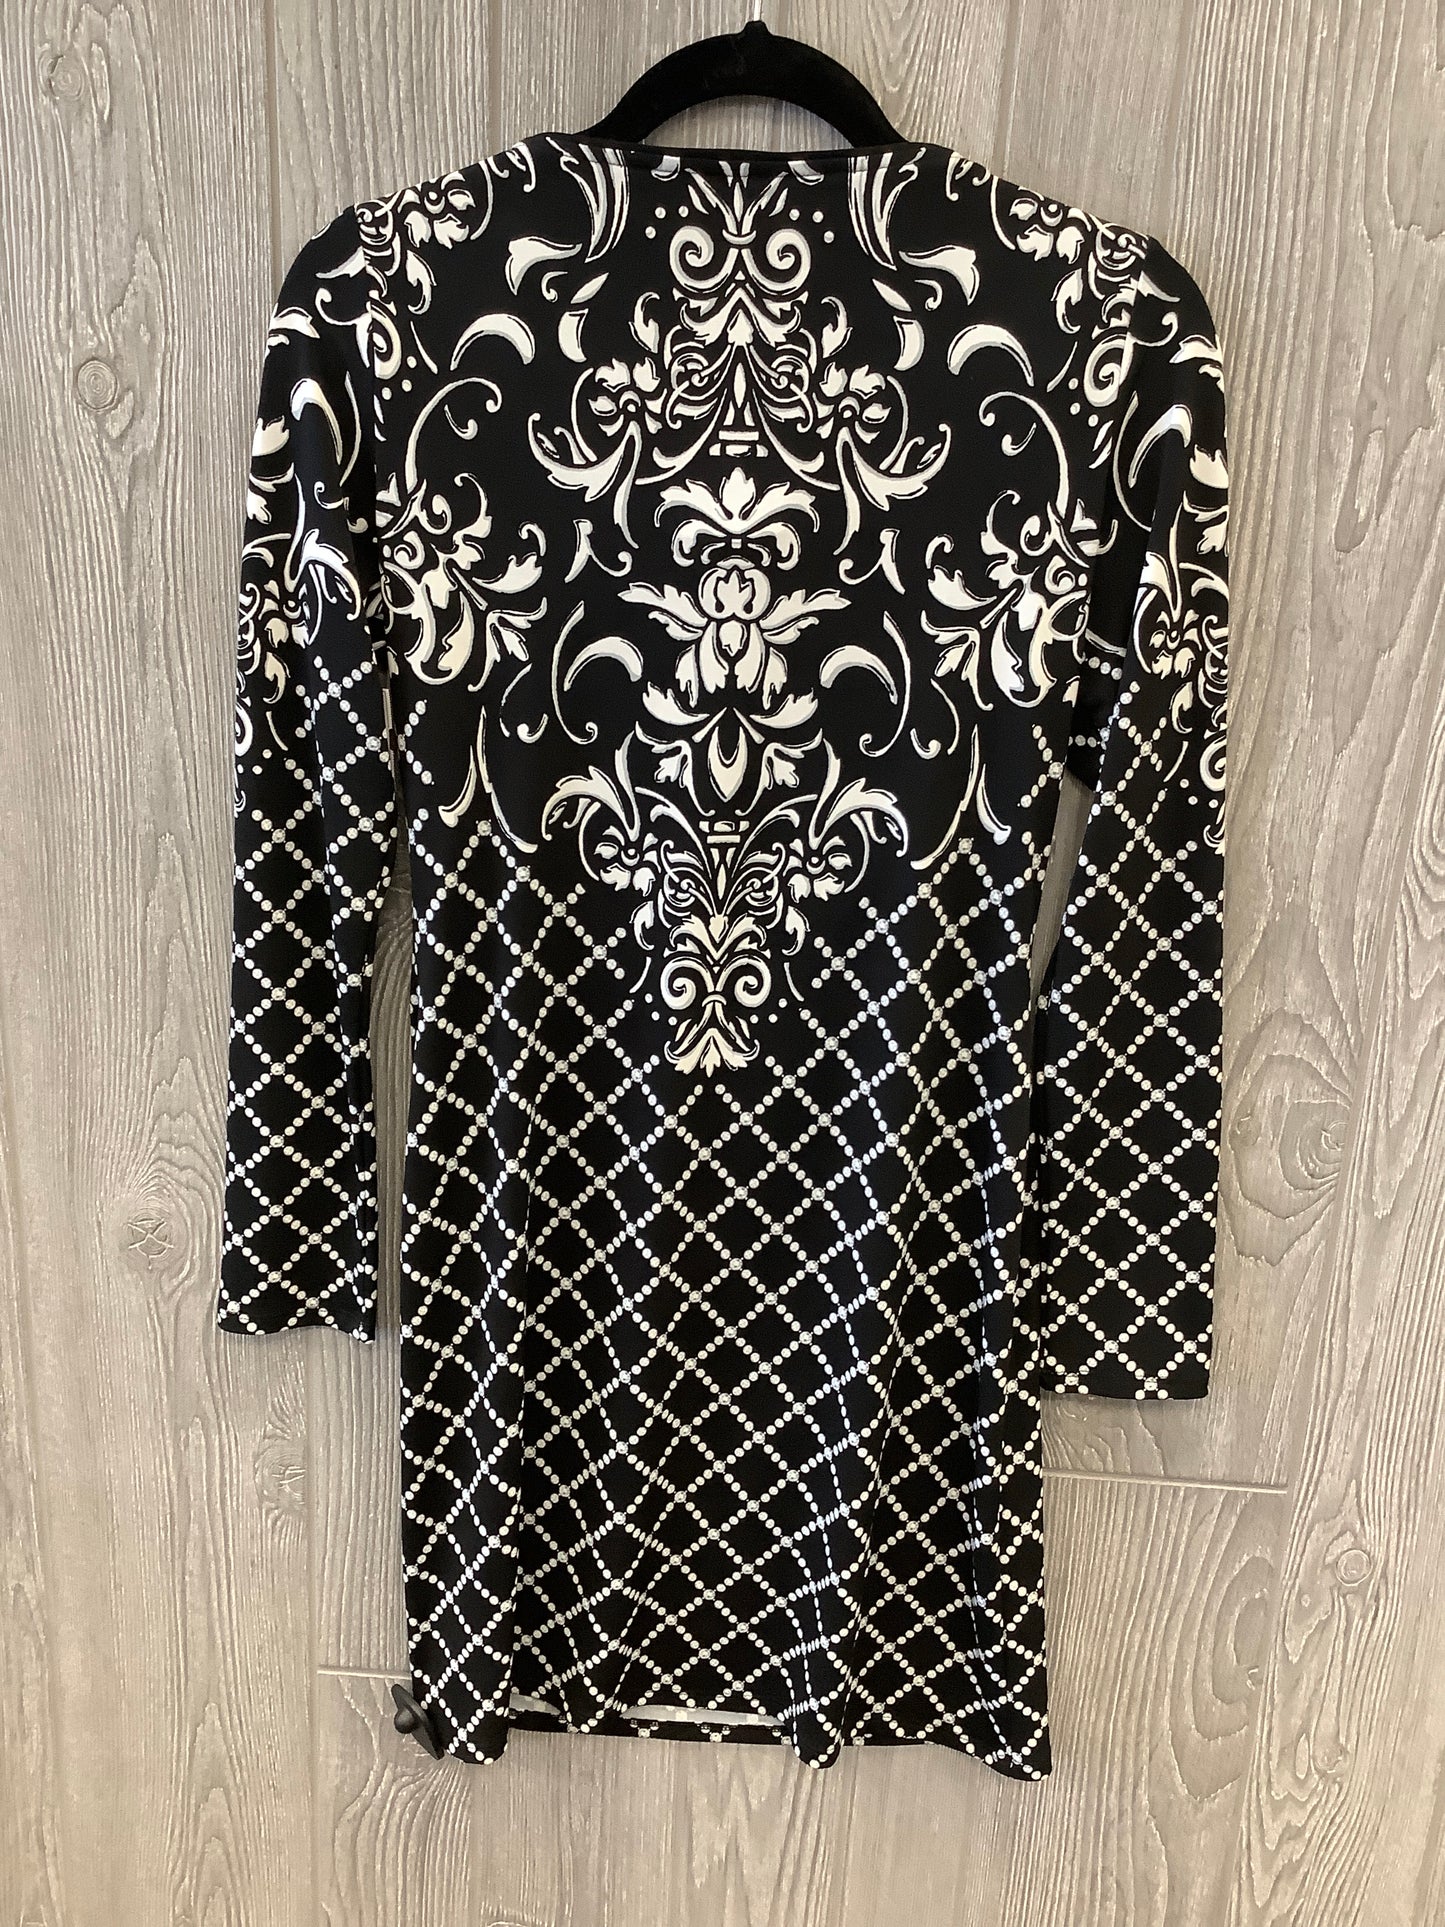 Dress Casual Midi By White House Black Market  Size: Xs